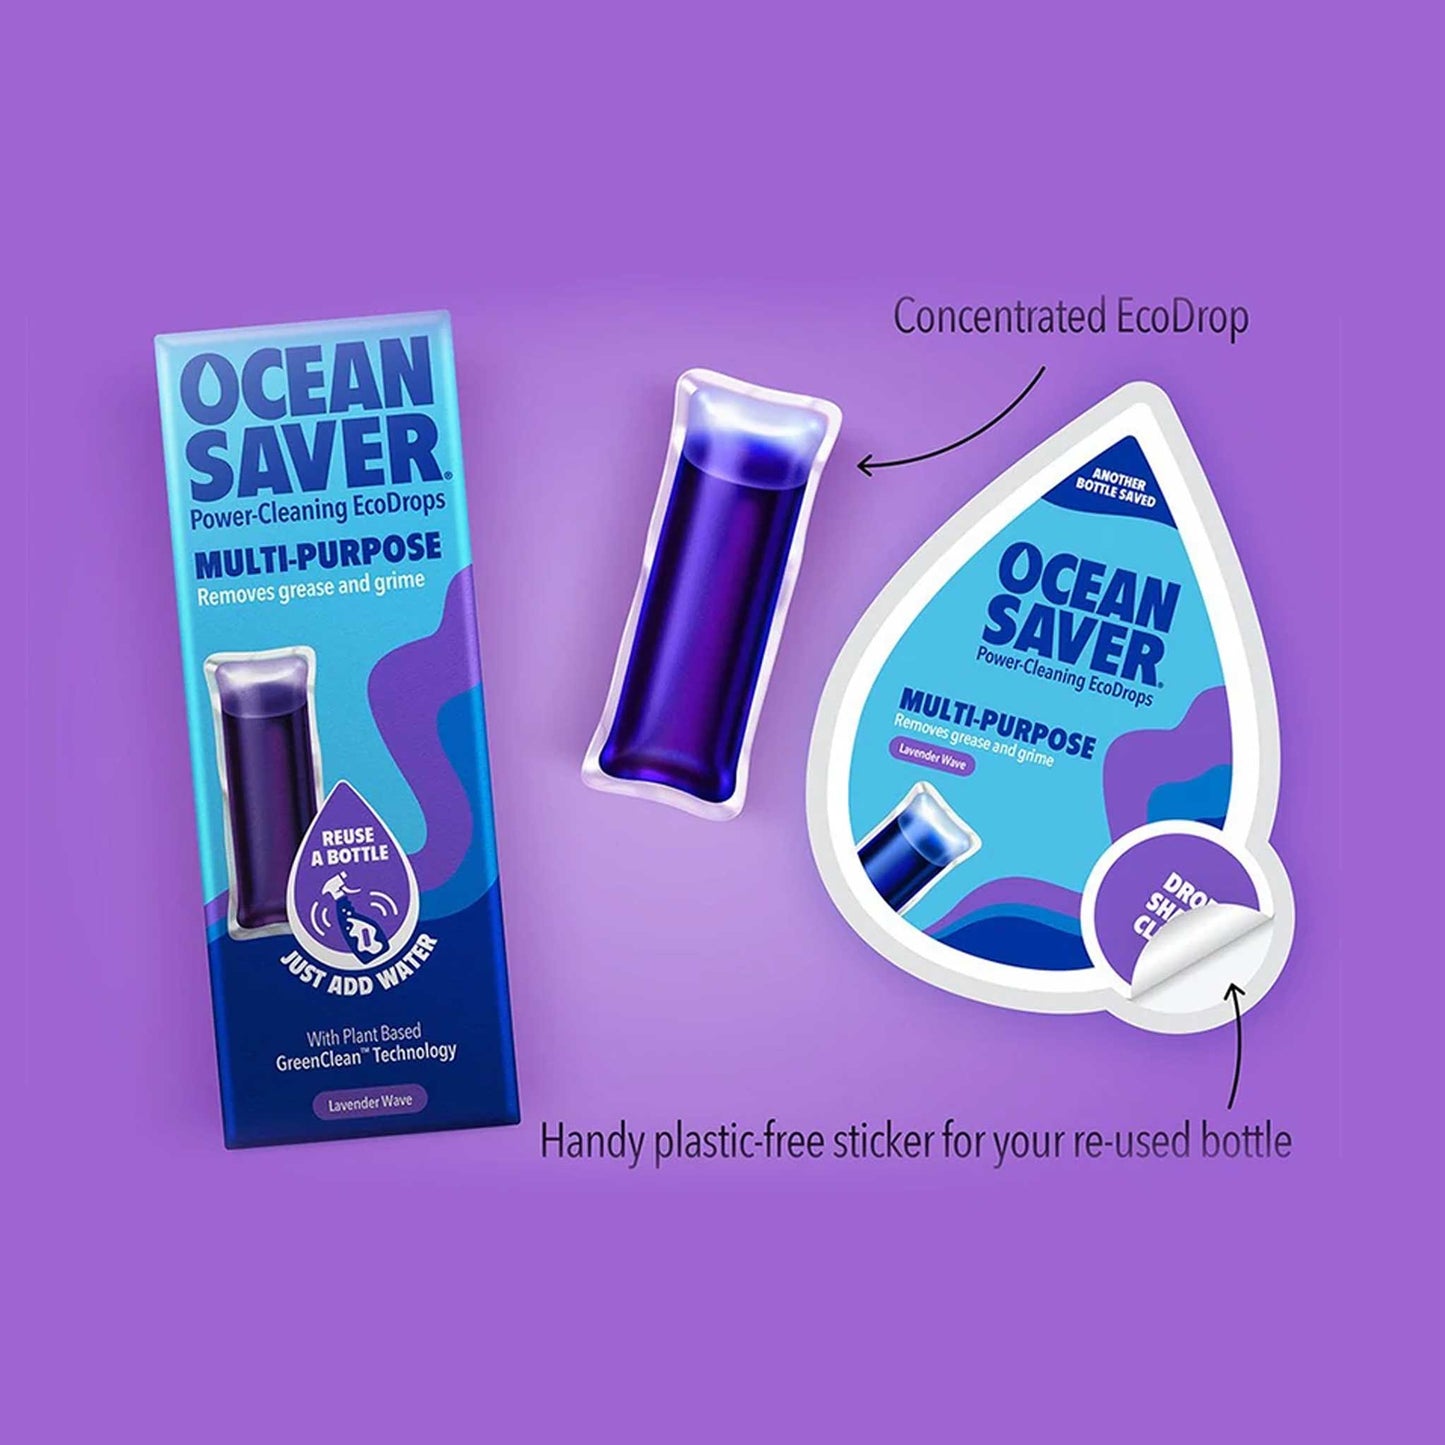 Load image into Gallery viewer, Ocean Saver All-Purpose Cleaners Ocean Saver Starter Pack 750ml - Lavender Wave Multipurpose EcoDrop
